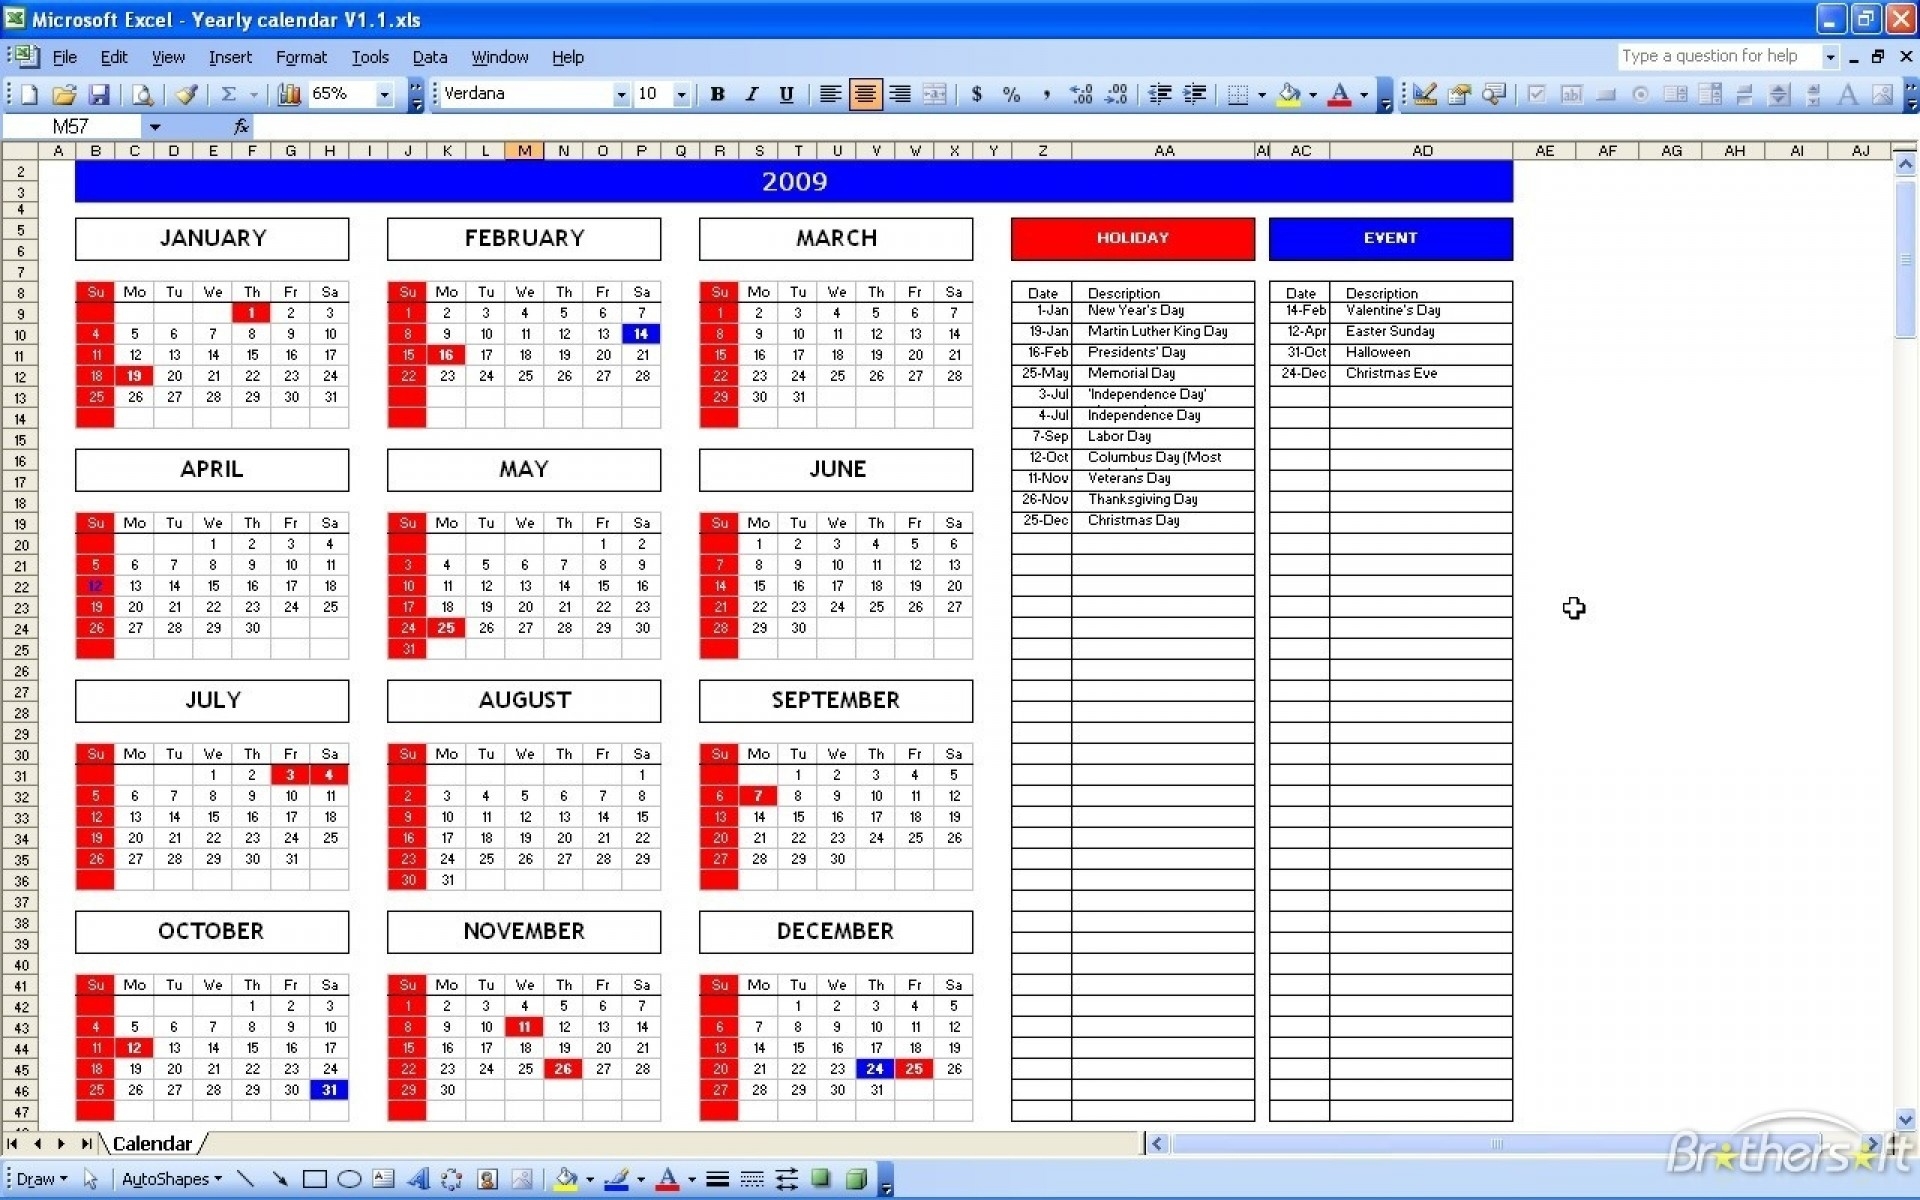 001 Excel Calendar Template Ideas Microsoft ~ Ulyssesroom Calendar Template Microsoft Excel